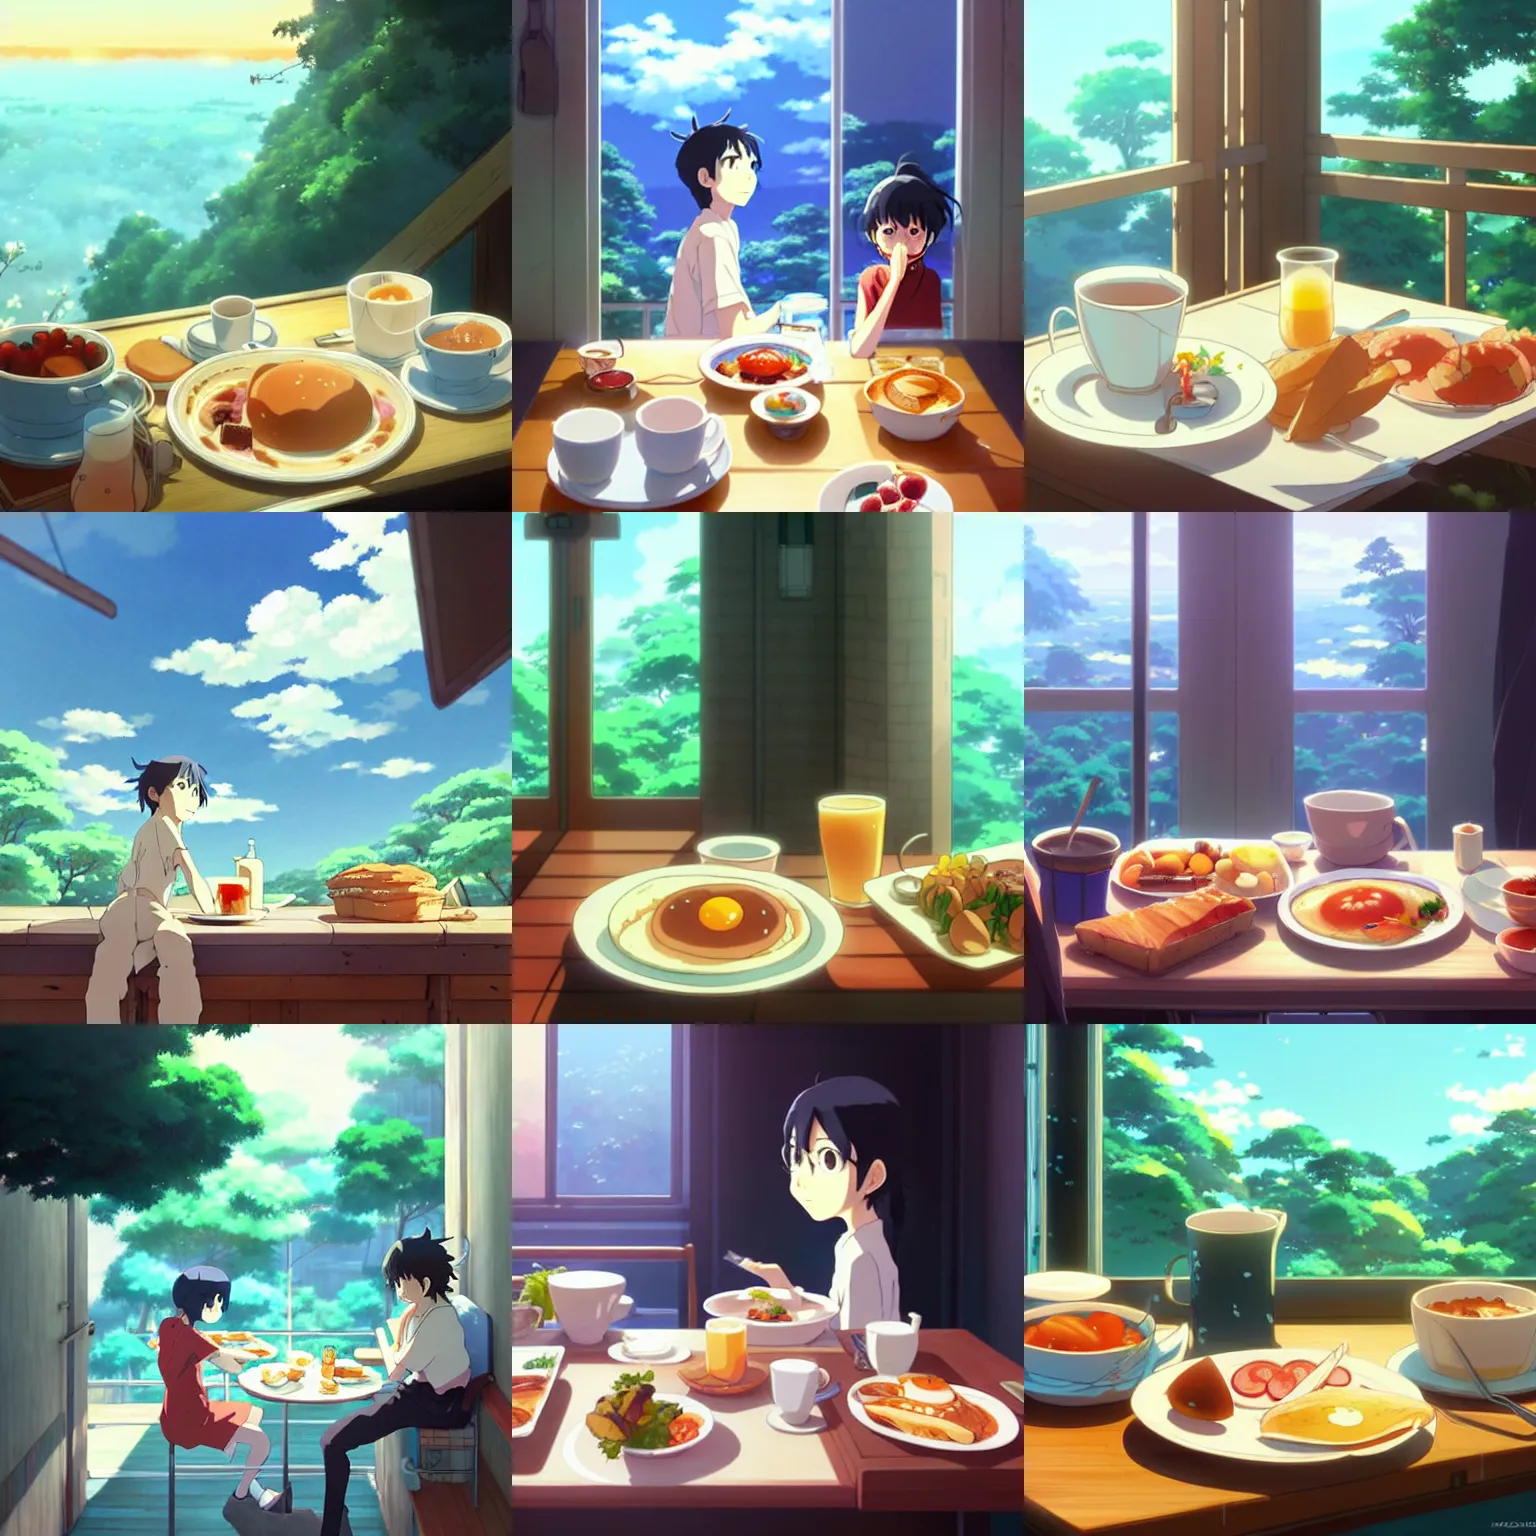 Prompt: a delicious breakfast, digital art, illustrations, by makoto shinkai and studio ghibli